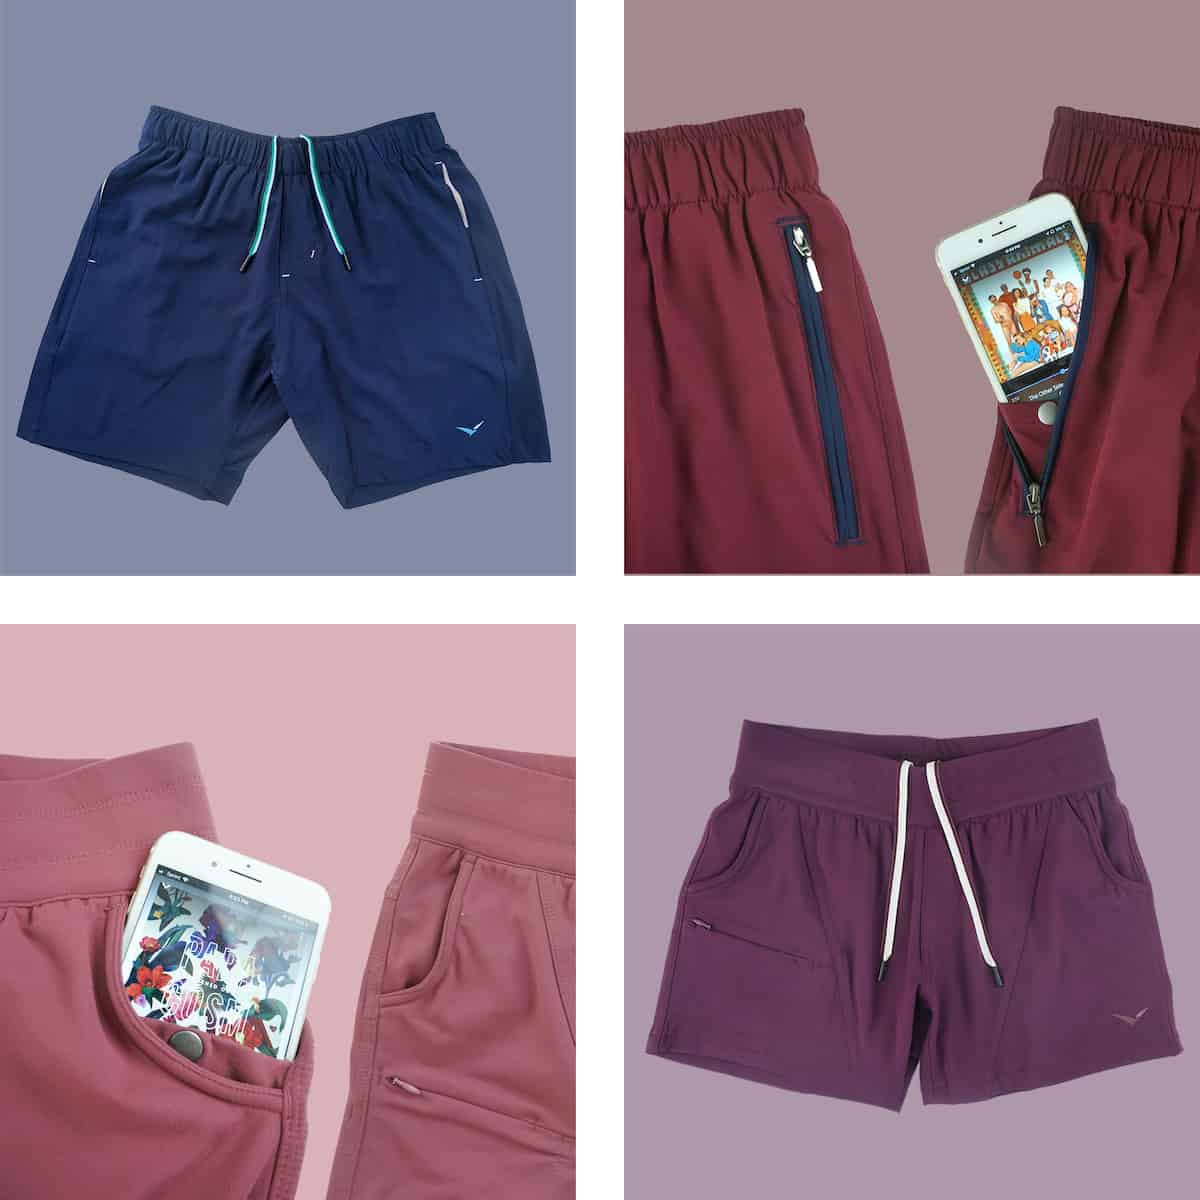 volo shorts colors and pockets